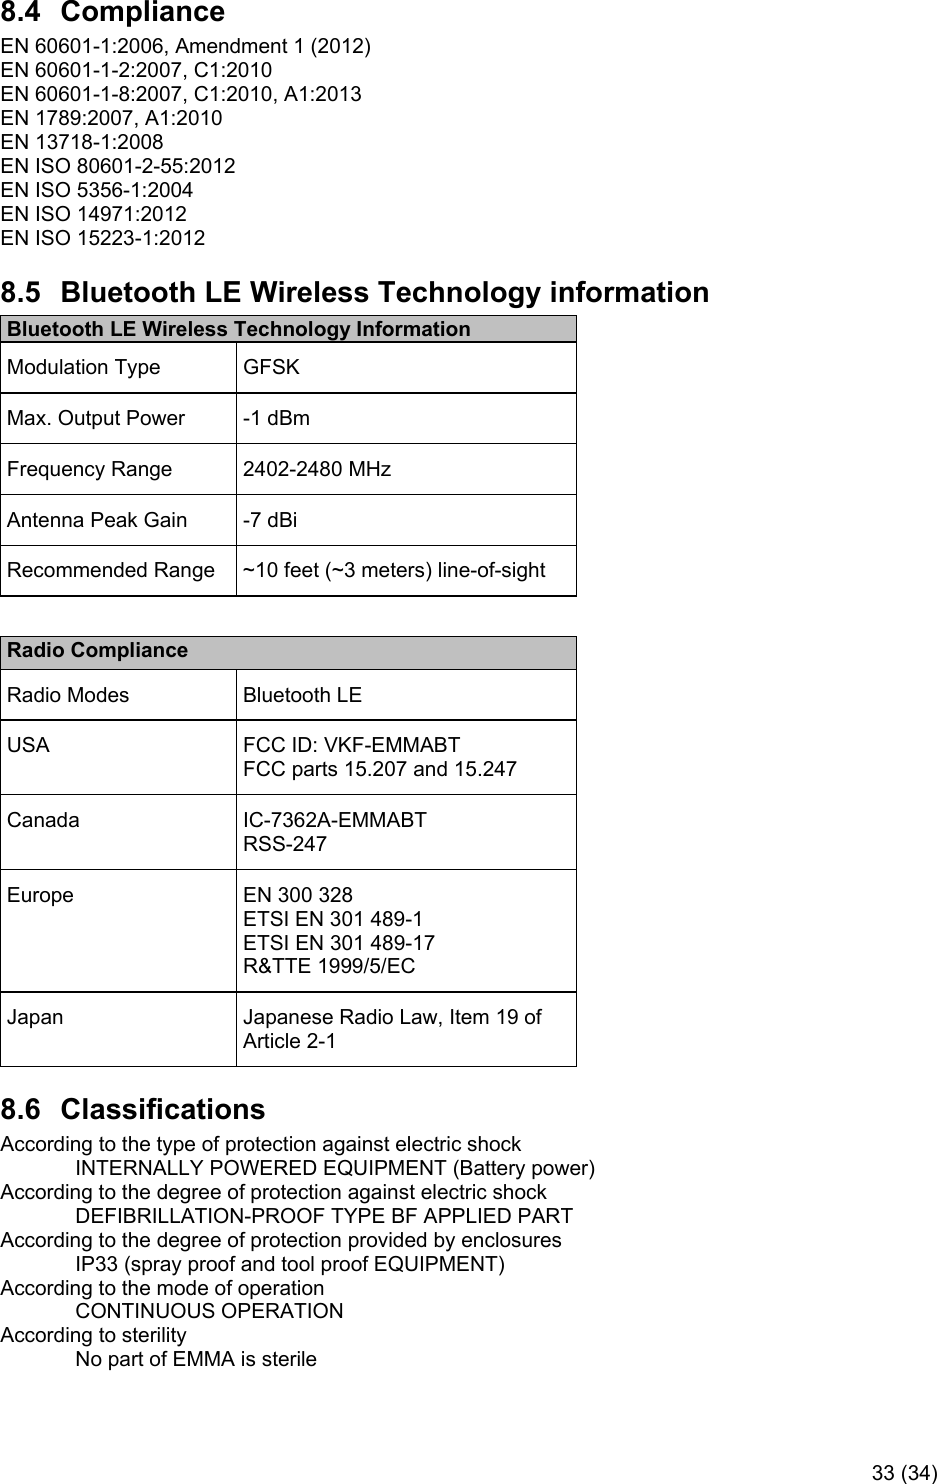     33 (34) 8.4  Compliance EN 60601-1:2006, Amendment 1 (2012) EN 60601-1-2:2007, C1:2010 EN 60601-1-8:2007, C1:2010, A1:2013 EN 1789:2007, A1:2010 EN 13718-1:2008 EN ISO 80601-2-55:2012 EN ISO 5356-1:2004 EN ISO 14971:2012 EN ISO 15223-1:2012 8.5  Bluetooth LE Wireless Technology information Bluetooth LE Wireless Technology Information Modulation Type  GFSK Max. Output Power  -1 dBm Frequency Range  2402-2480 MHz Antenna Peak Gain  -7 dBi Recommended Range  ~10 feet (~3 meters) line-of-sight  Radio Compliance Radio Modes  Bluetooth LE USA  FCC ID: VKF-EMMABT FCC parts 15.207 and 15.247 Canada  IC-7362A-EMMABT RSS-247 Europe  EN 300 328 ETSI EN 301 489-1 ETSI EN 301 489-17 R&amp;TTE 1999/5/EC Japan  Japanese Radio Law, Item 19 of Article 2-1 8.6  Classifications According to the type of protection against electric shock    INTERNALLY POWERED EQUIPMENT (Battery power) According to the degree of protection against electric shock   DEFIBRILLATION-PROOF TYPE BF APPLIED PART According to the degree of protection provided by enclosures   IP33 (spray proof and tool proof EQUIPMENT) According to the mode of operation   CONTINUOUS OPERATION According to sterility   No part of EMMA is sterile